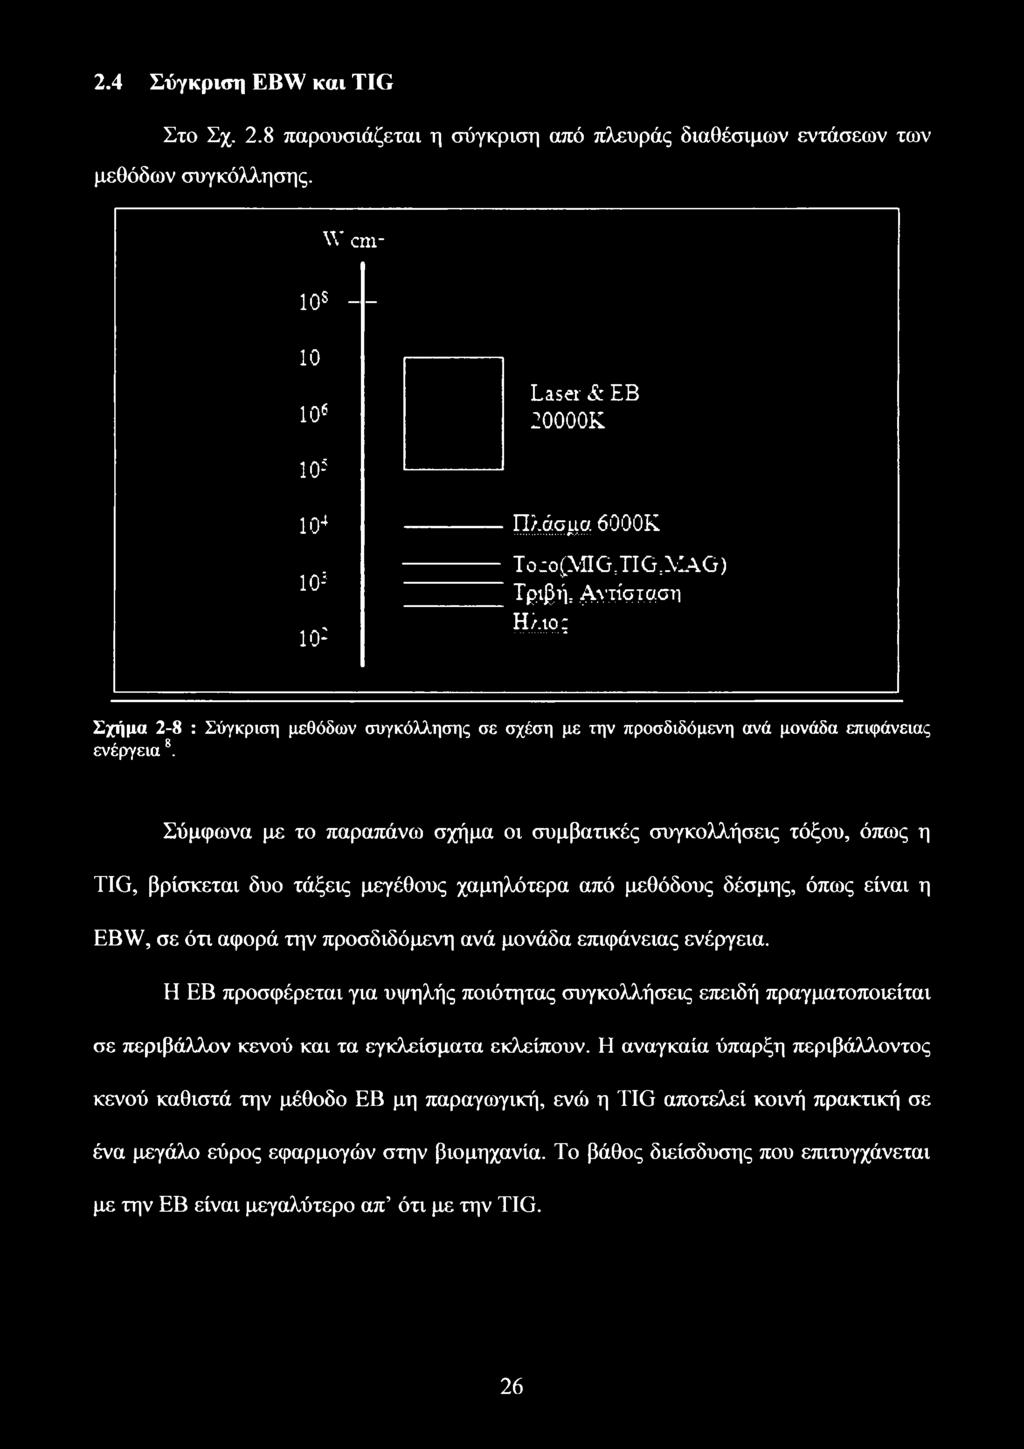 G) Τριβή, Αντίσταση Ηλιος ' Σχήμα 2-8 : Σύγκριση μεθόδων συγκόλλησης σε σχέση με την προσδιδόμενη ανά μονάδα επιφάνειας ενέργεια8.